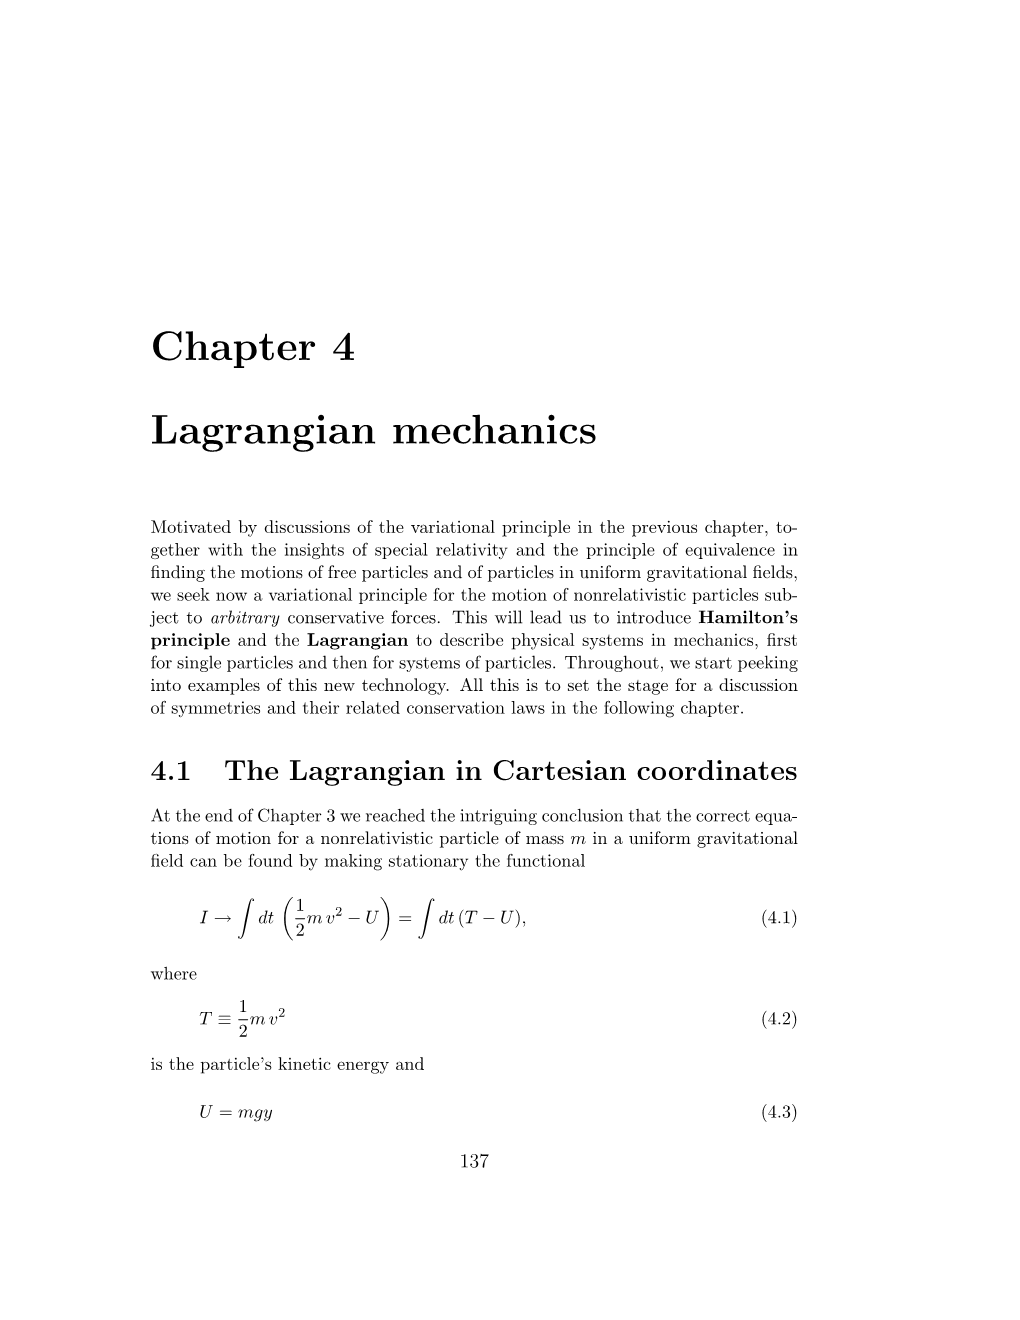 Chapter 4 Lagrangian Mechanics